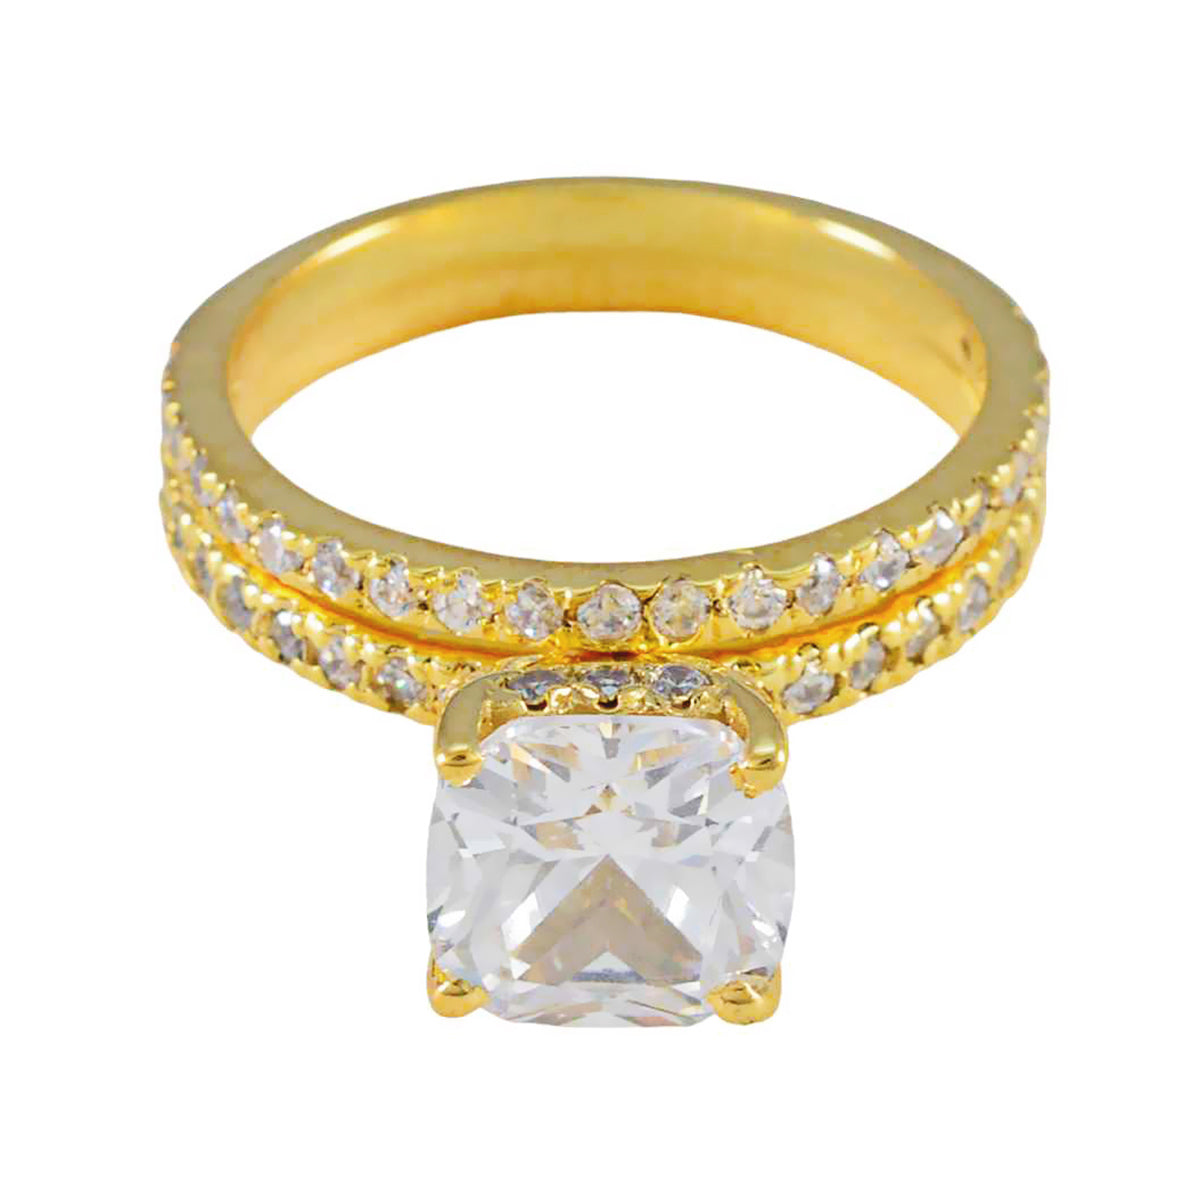 Riyo Gemstone Silver Ring With Yellow Gold Plating White CZ Stone Cushion Shape Prong Setting Handamde Jewelry Black Friday Ring